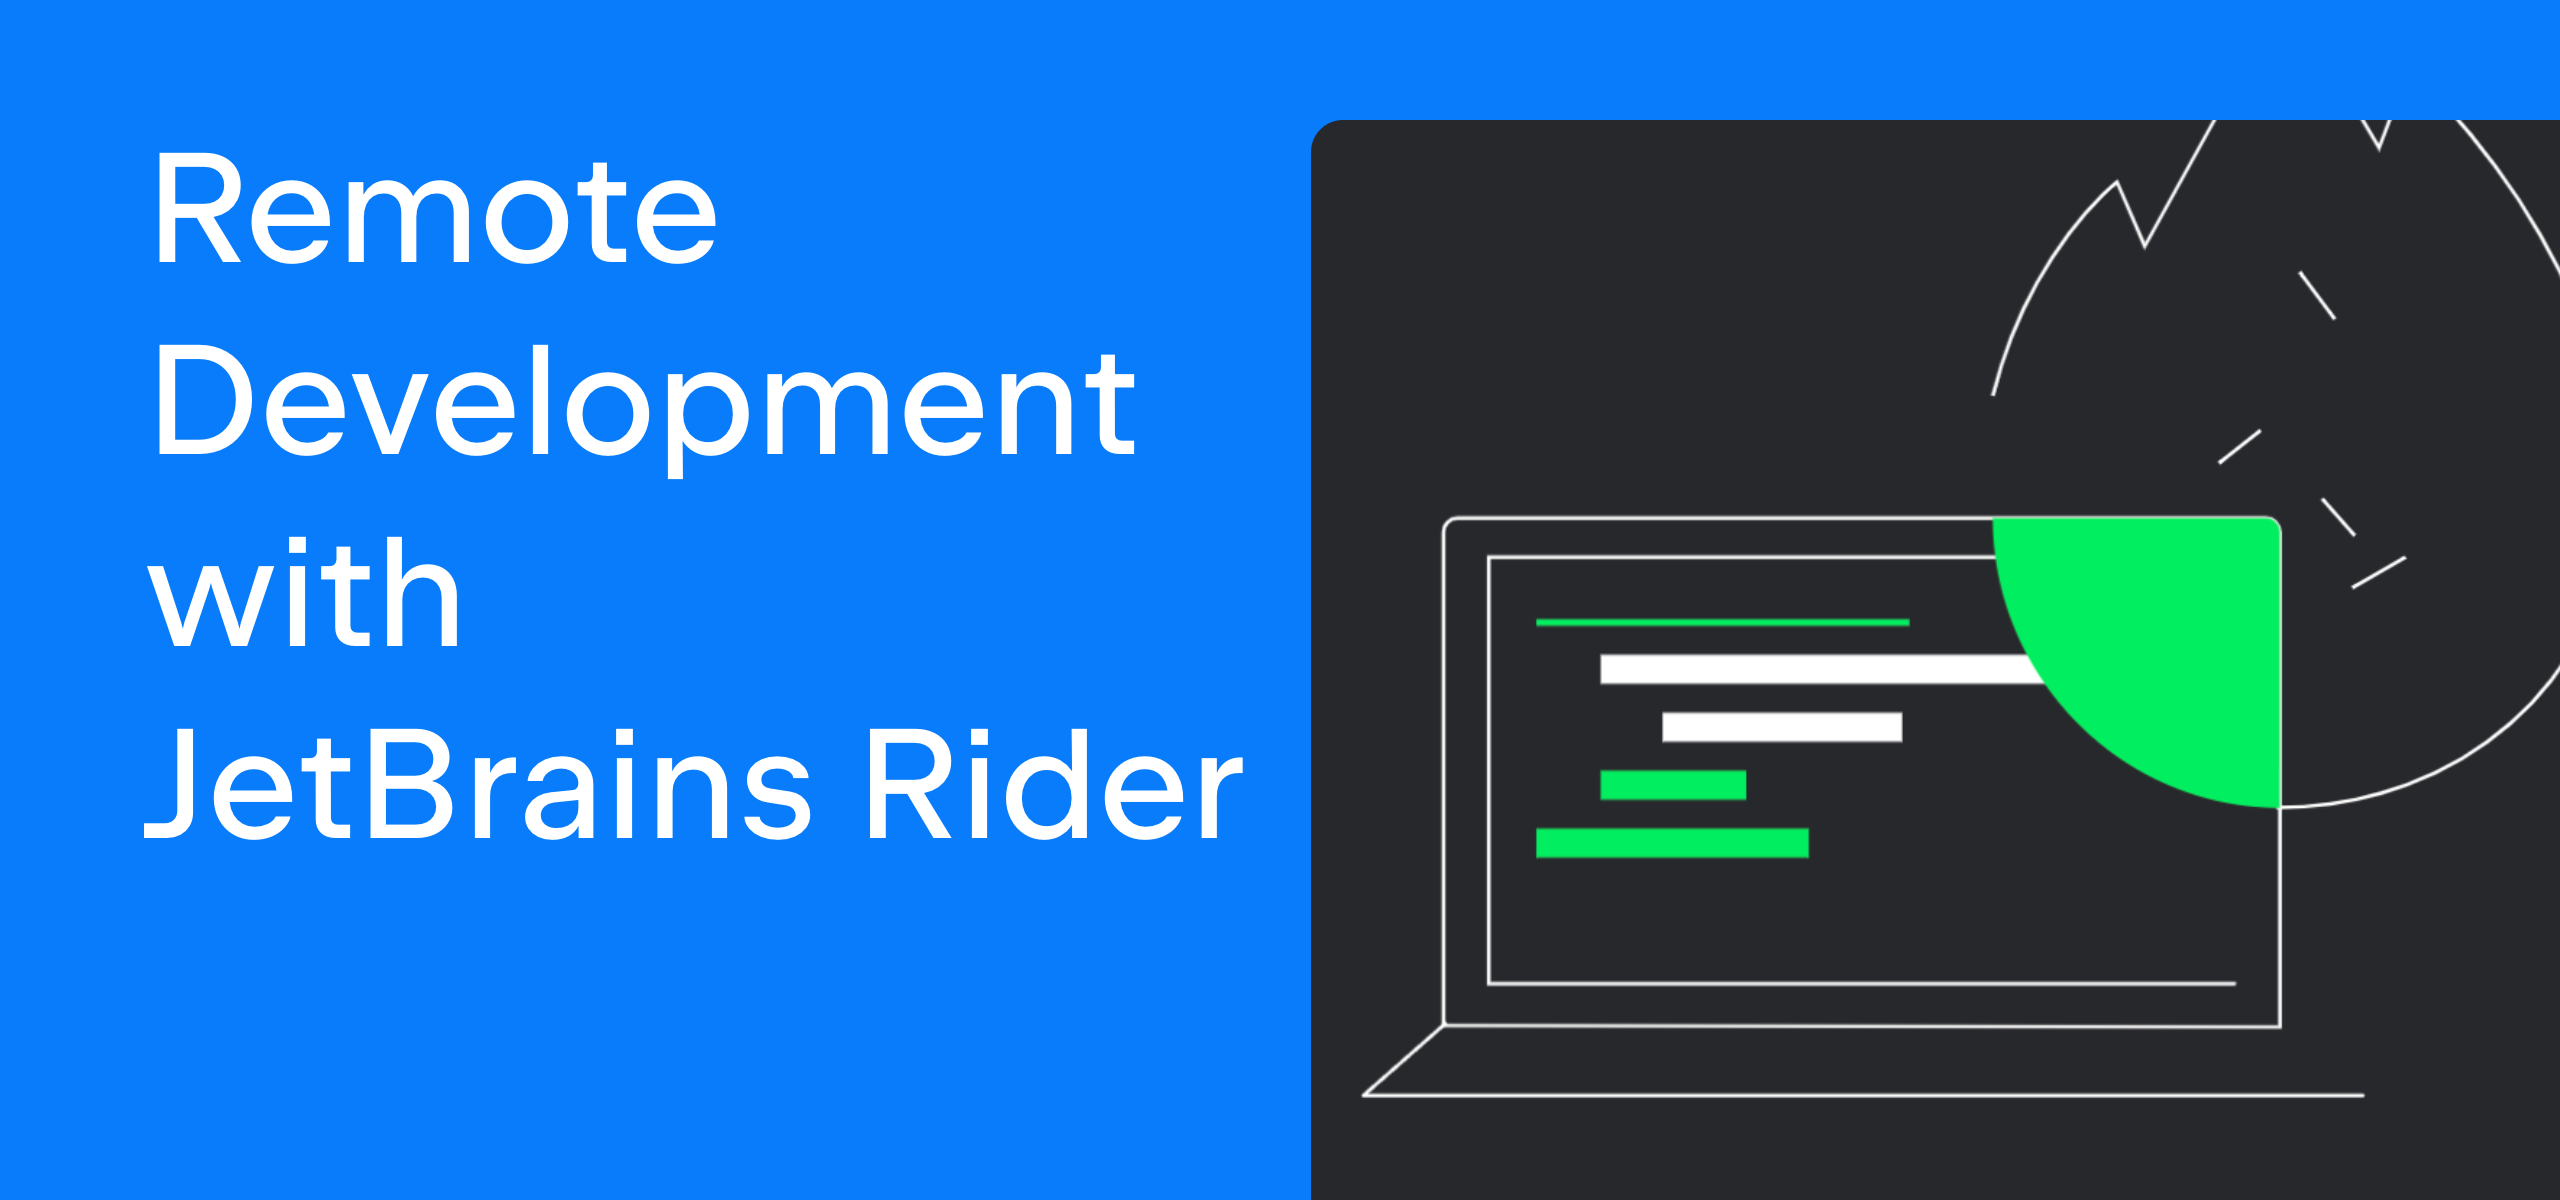 Remote Development with JetBrains Rider